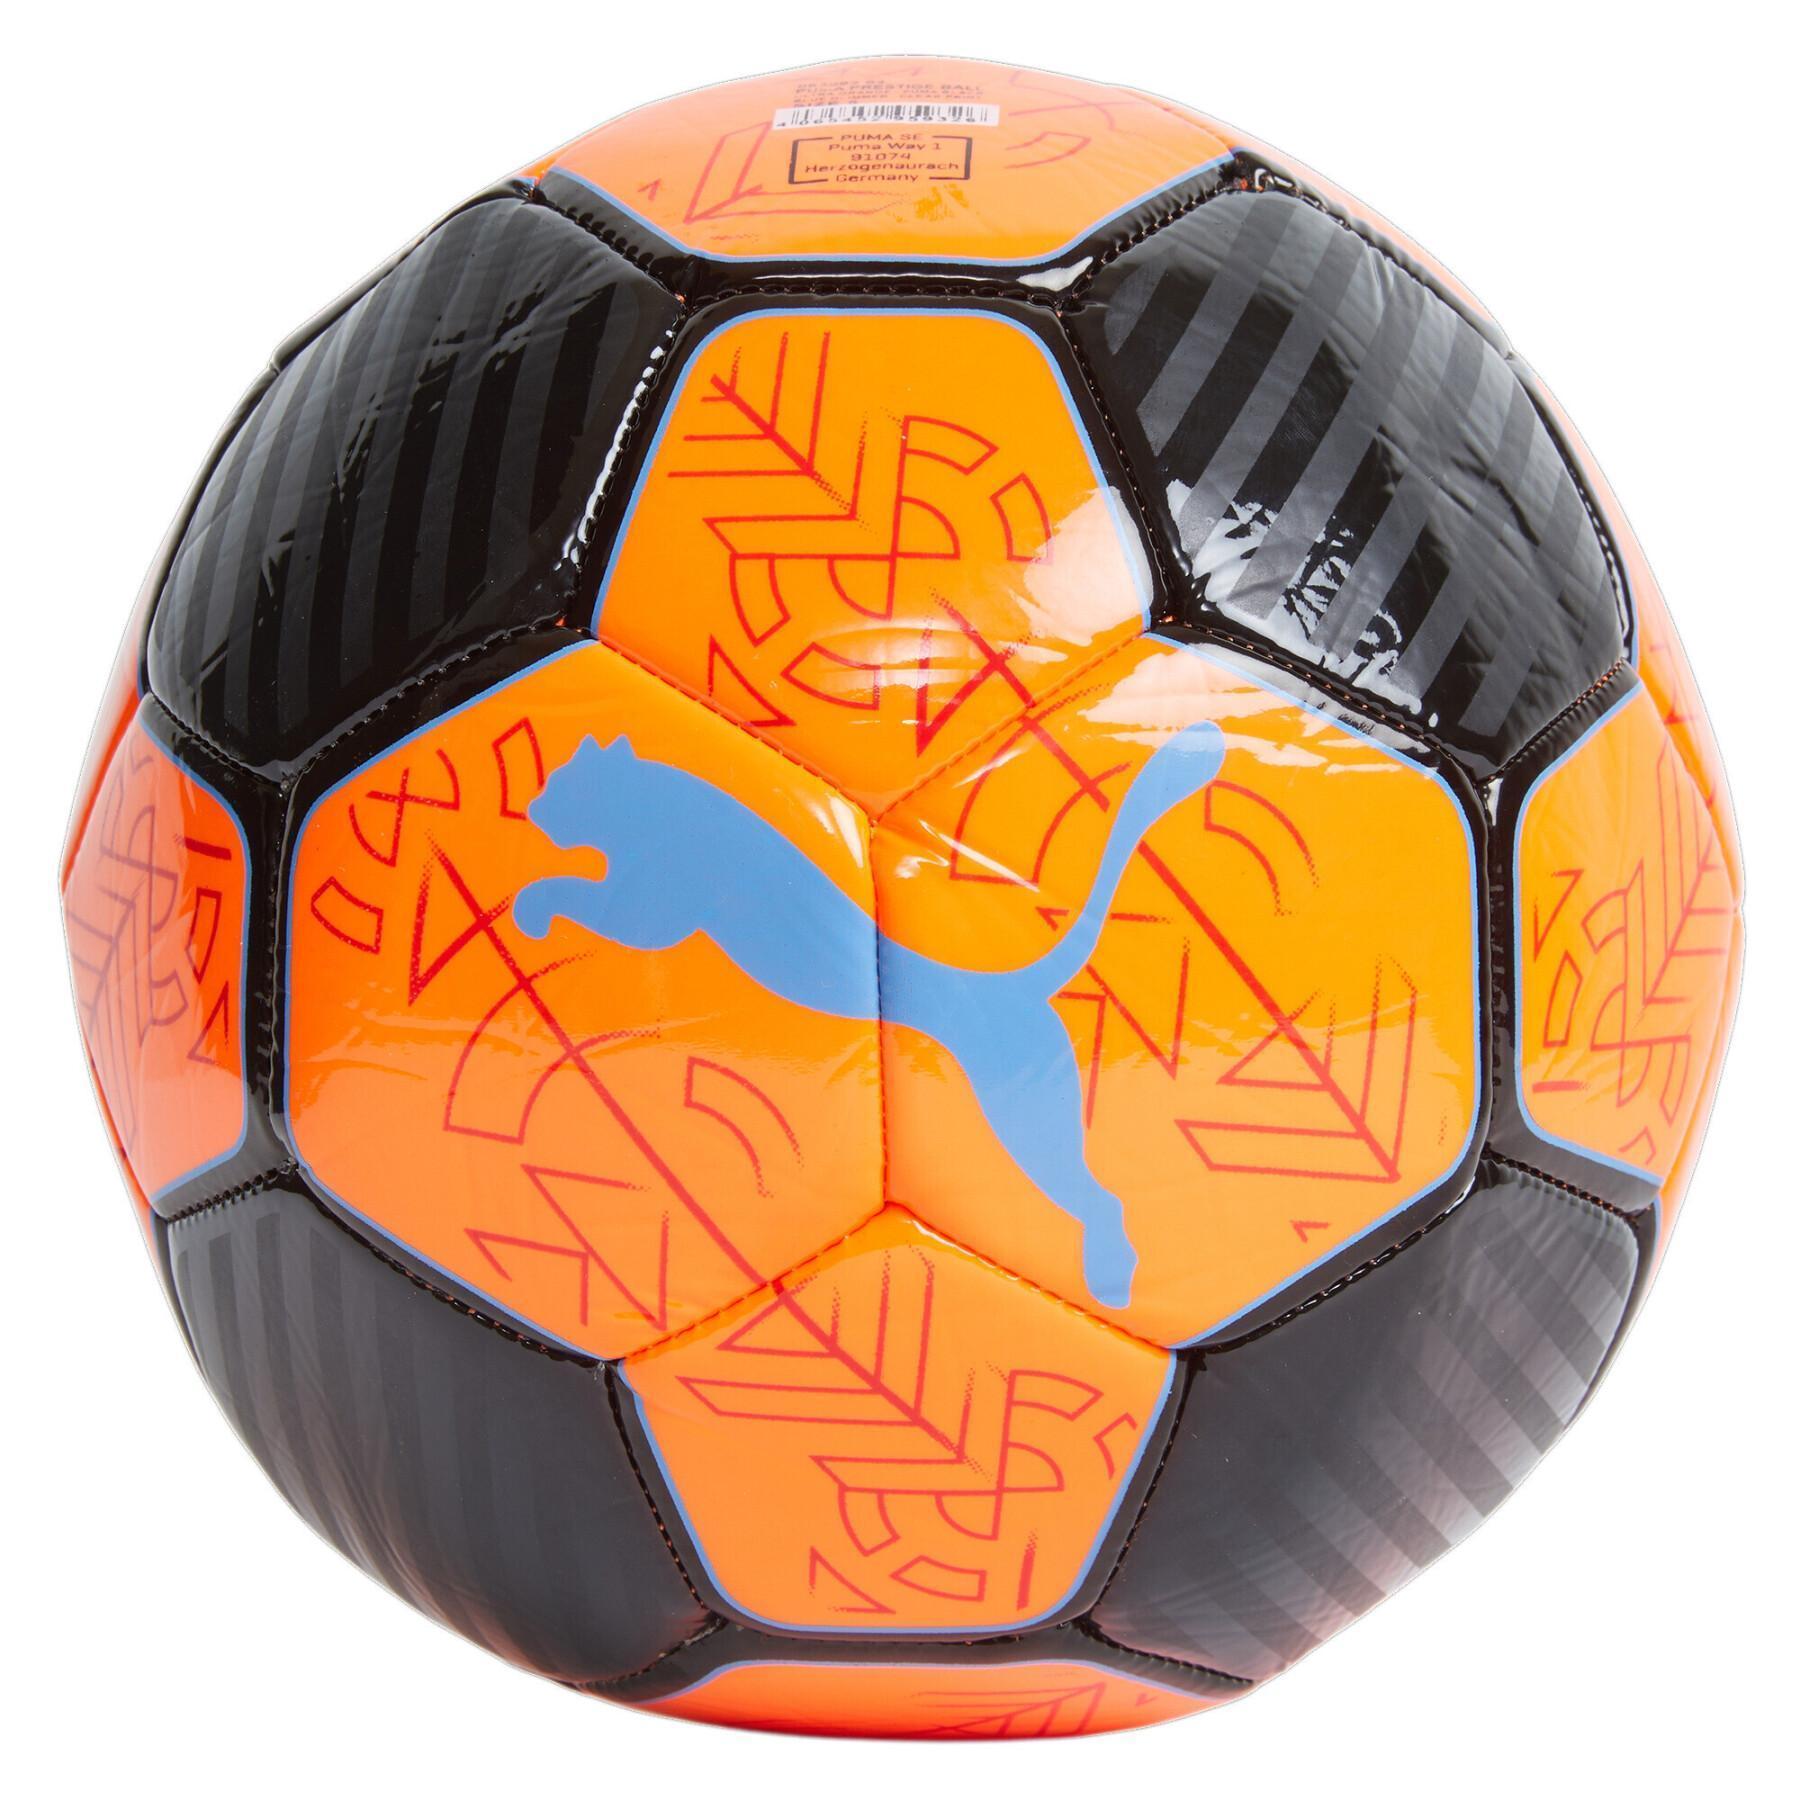 Ballon de football OM fan holographique orange - Puma